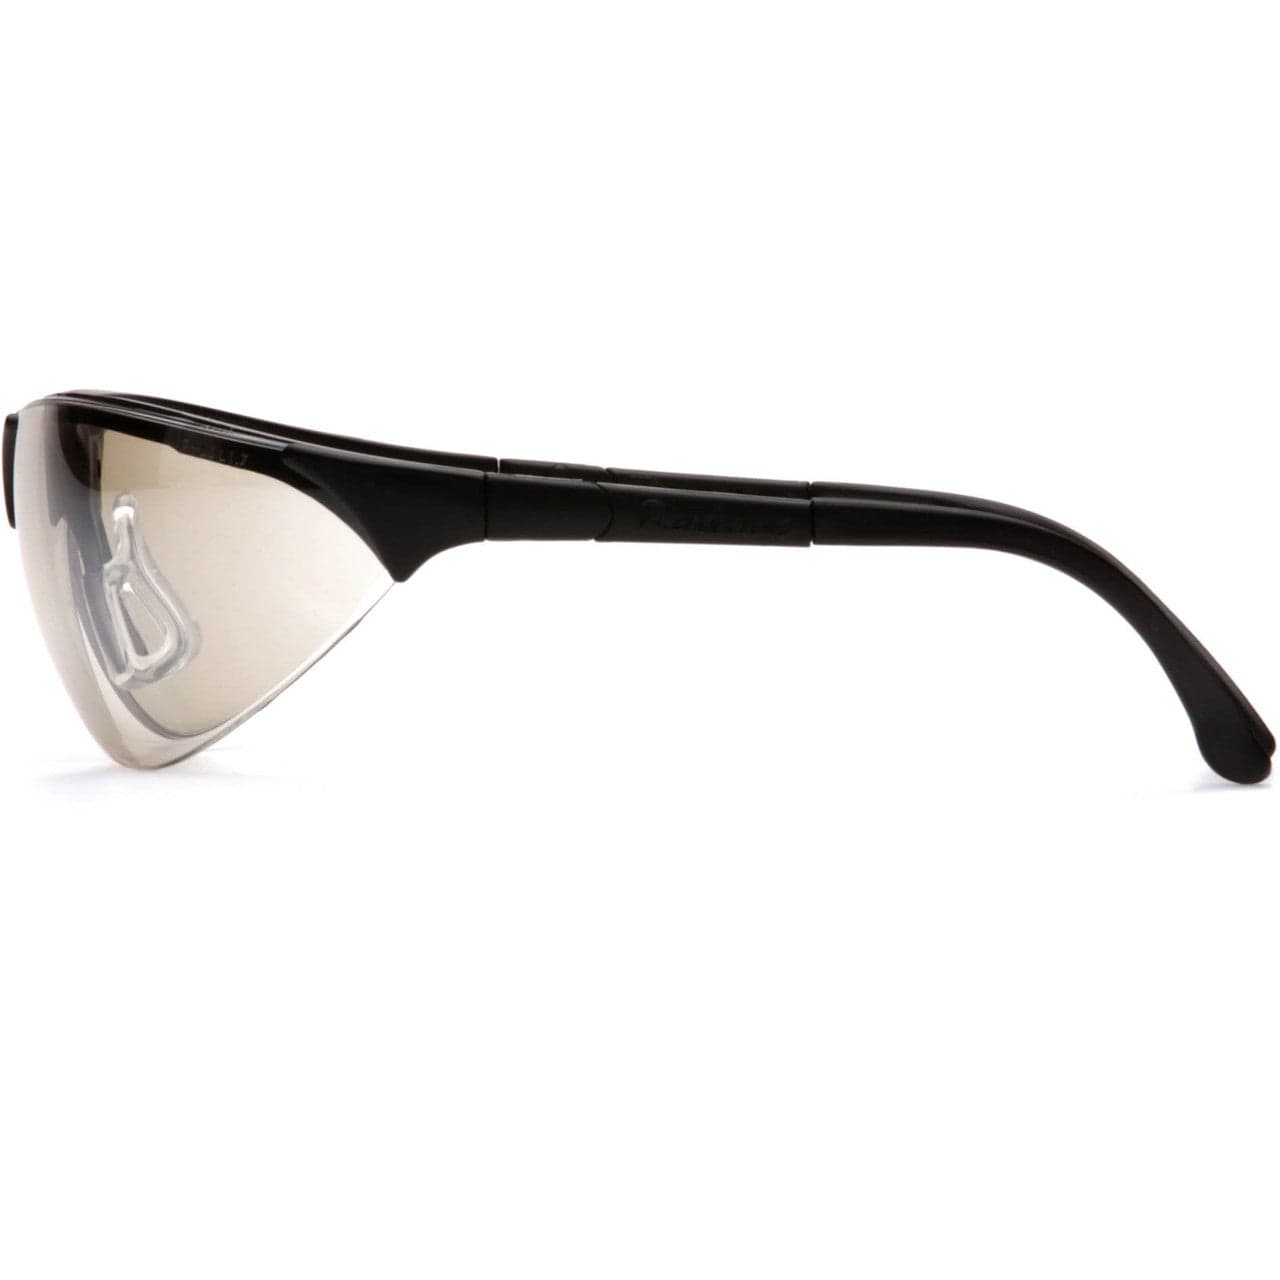 Pyramex Rendezvous Safety Glasses Black Frame Indoor/Outdoor Lens SB2880S Side